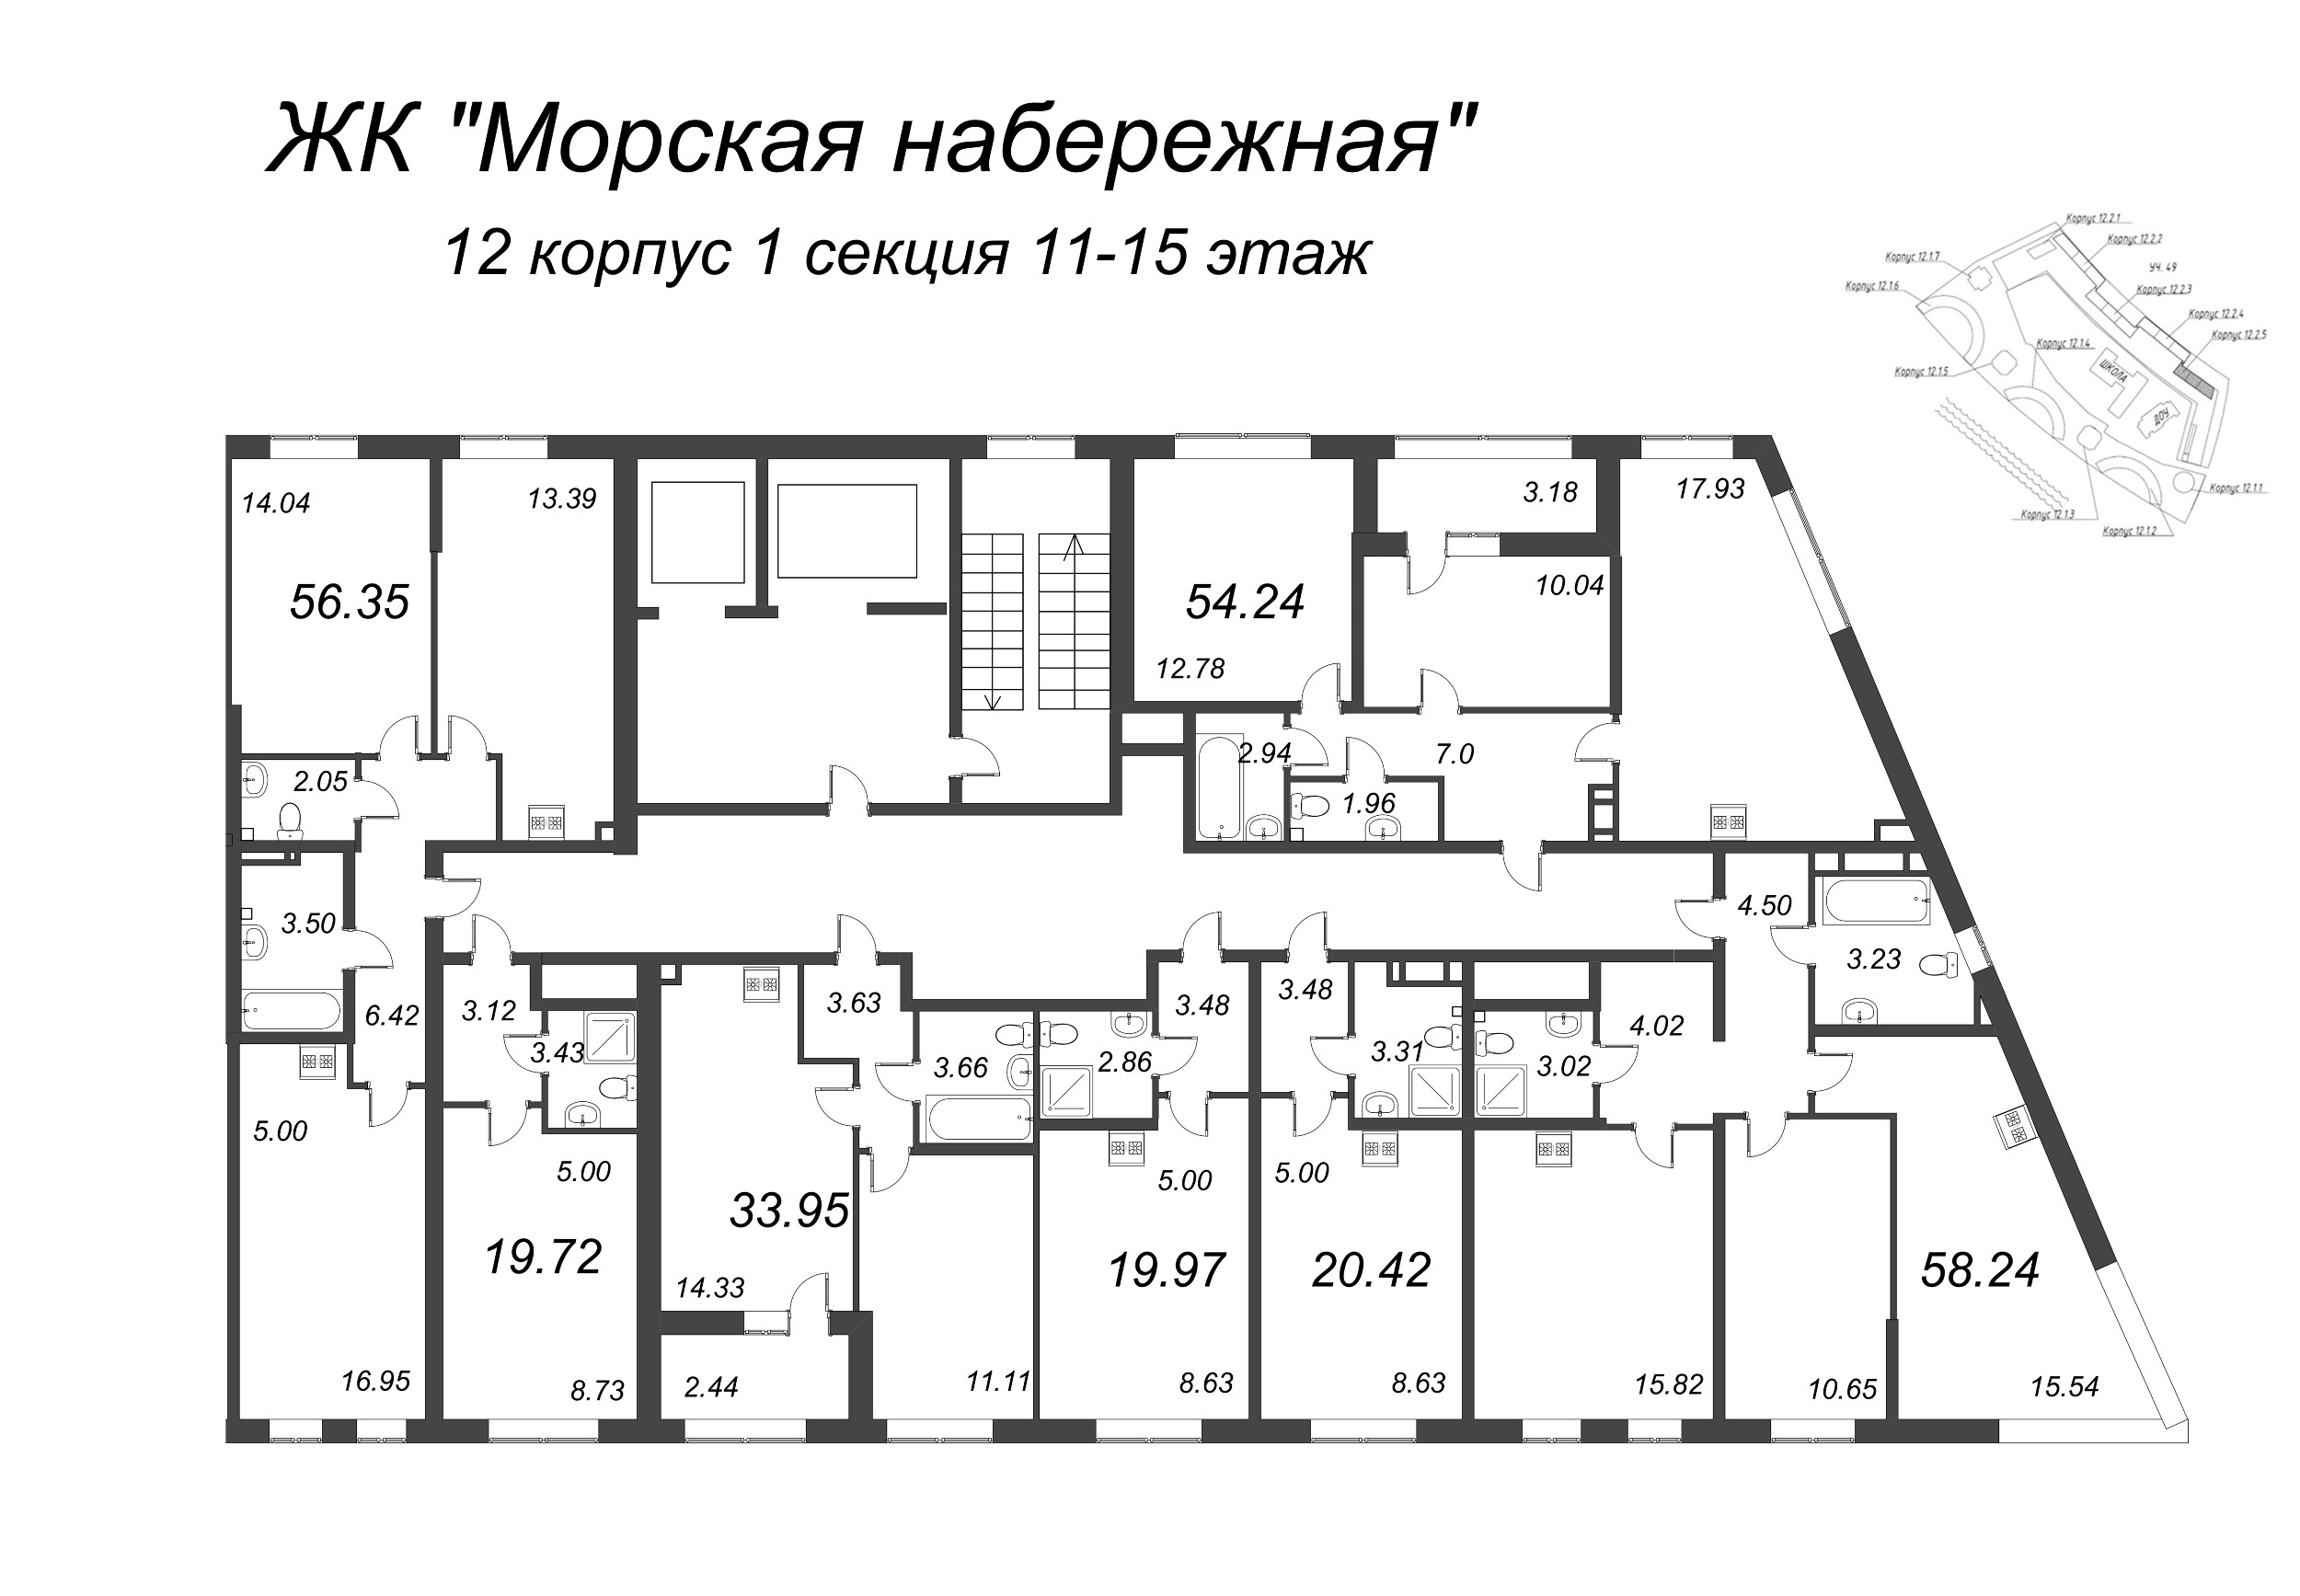 3-комнатная (Евро) квартира, 56.35 м² - планировка этажа